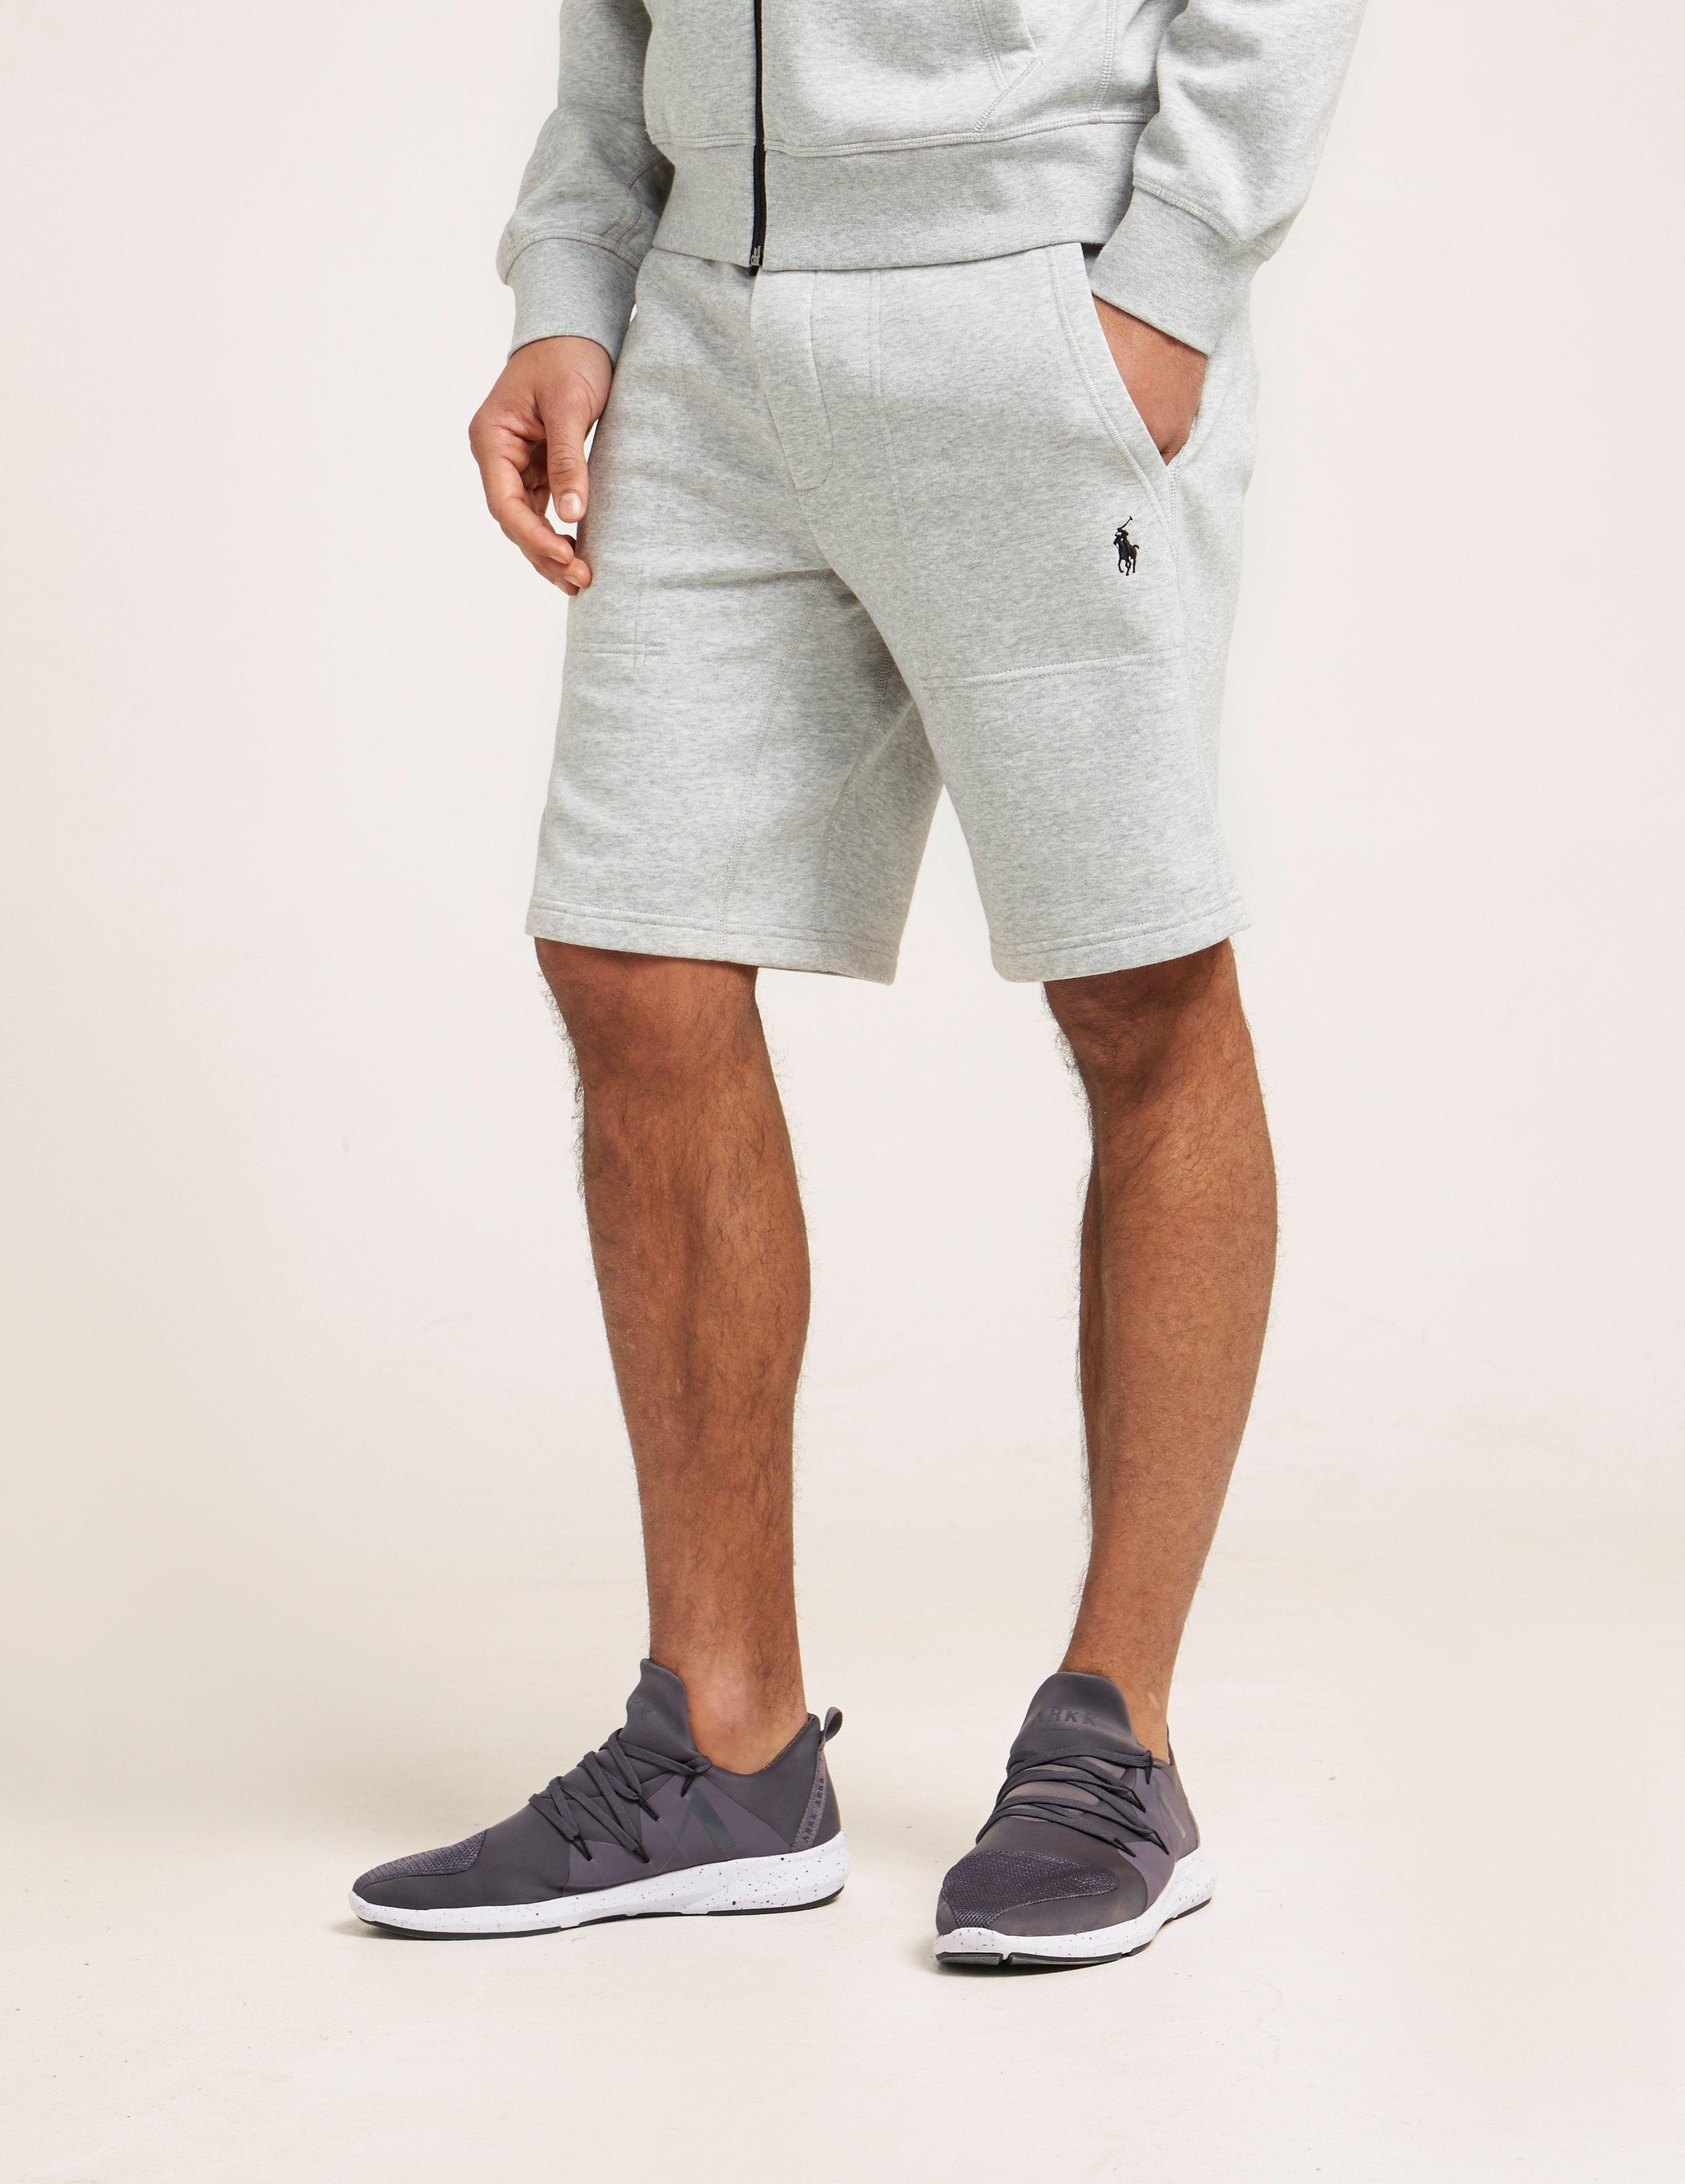 ralph lauren fleece shorts